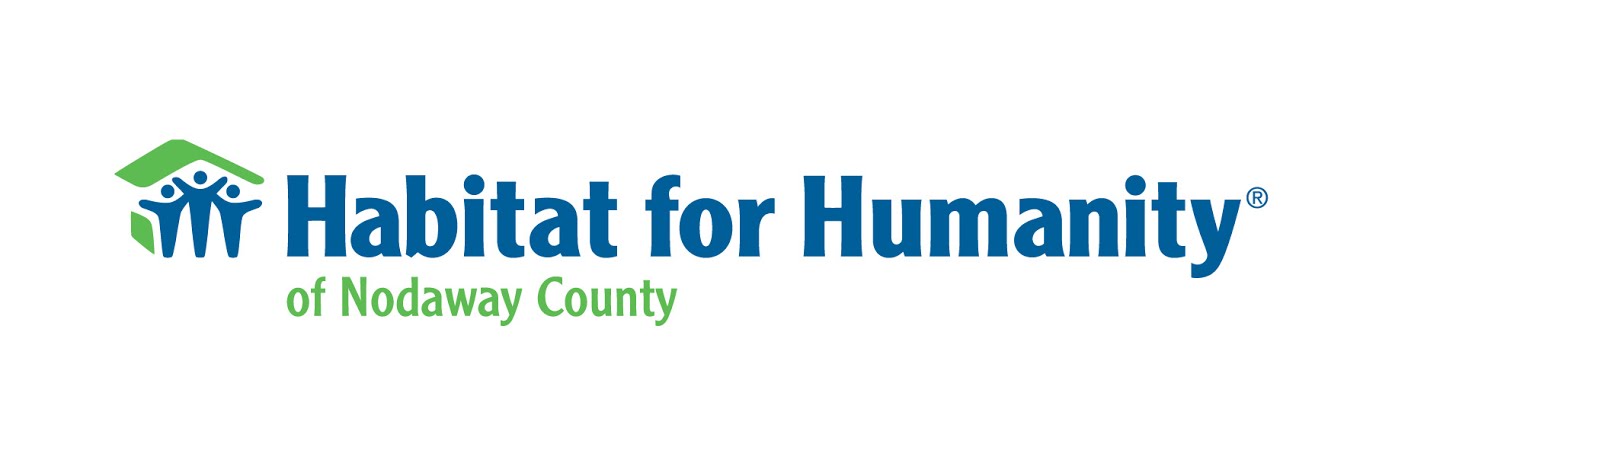 Habitat for Humanity of Nodaway County